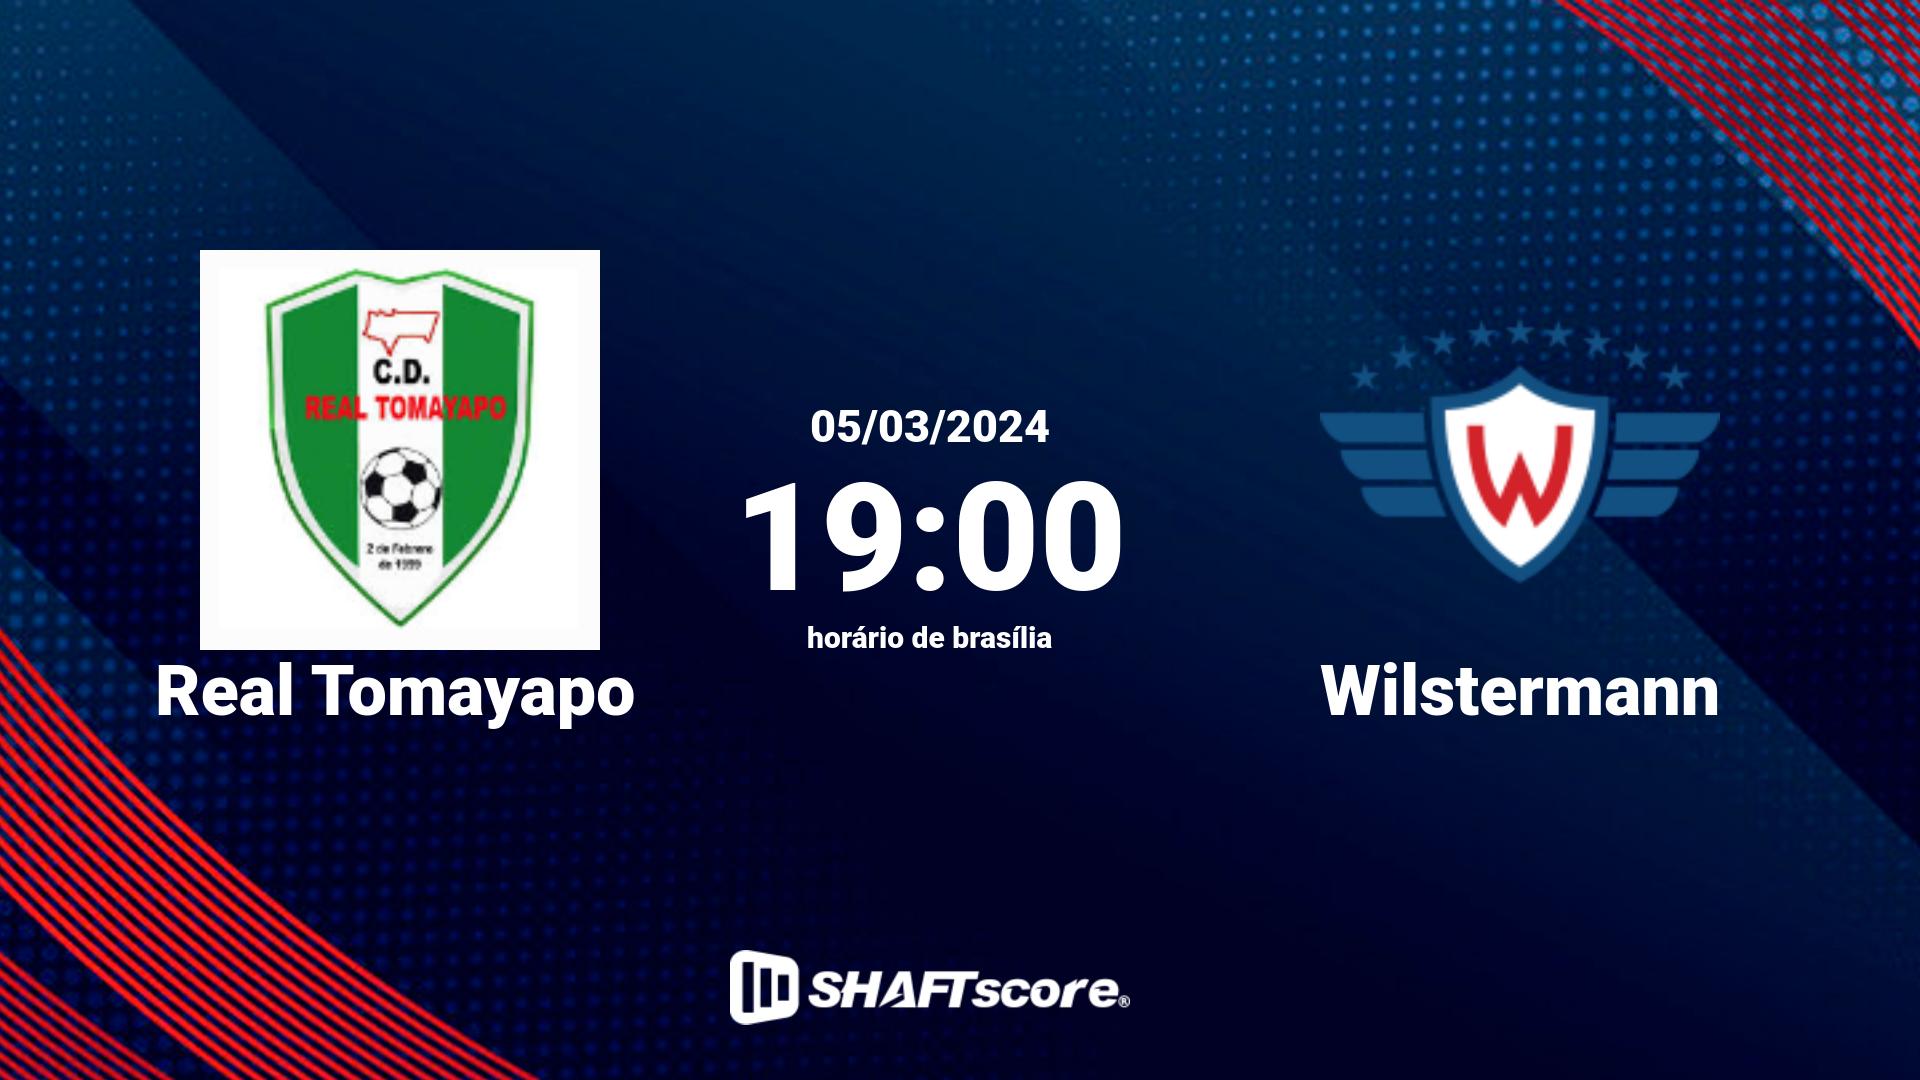 Estatísticas do jogo Real Tomayapo vs Wilstermann 05.03 19:00